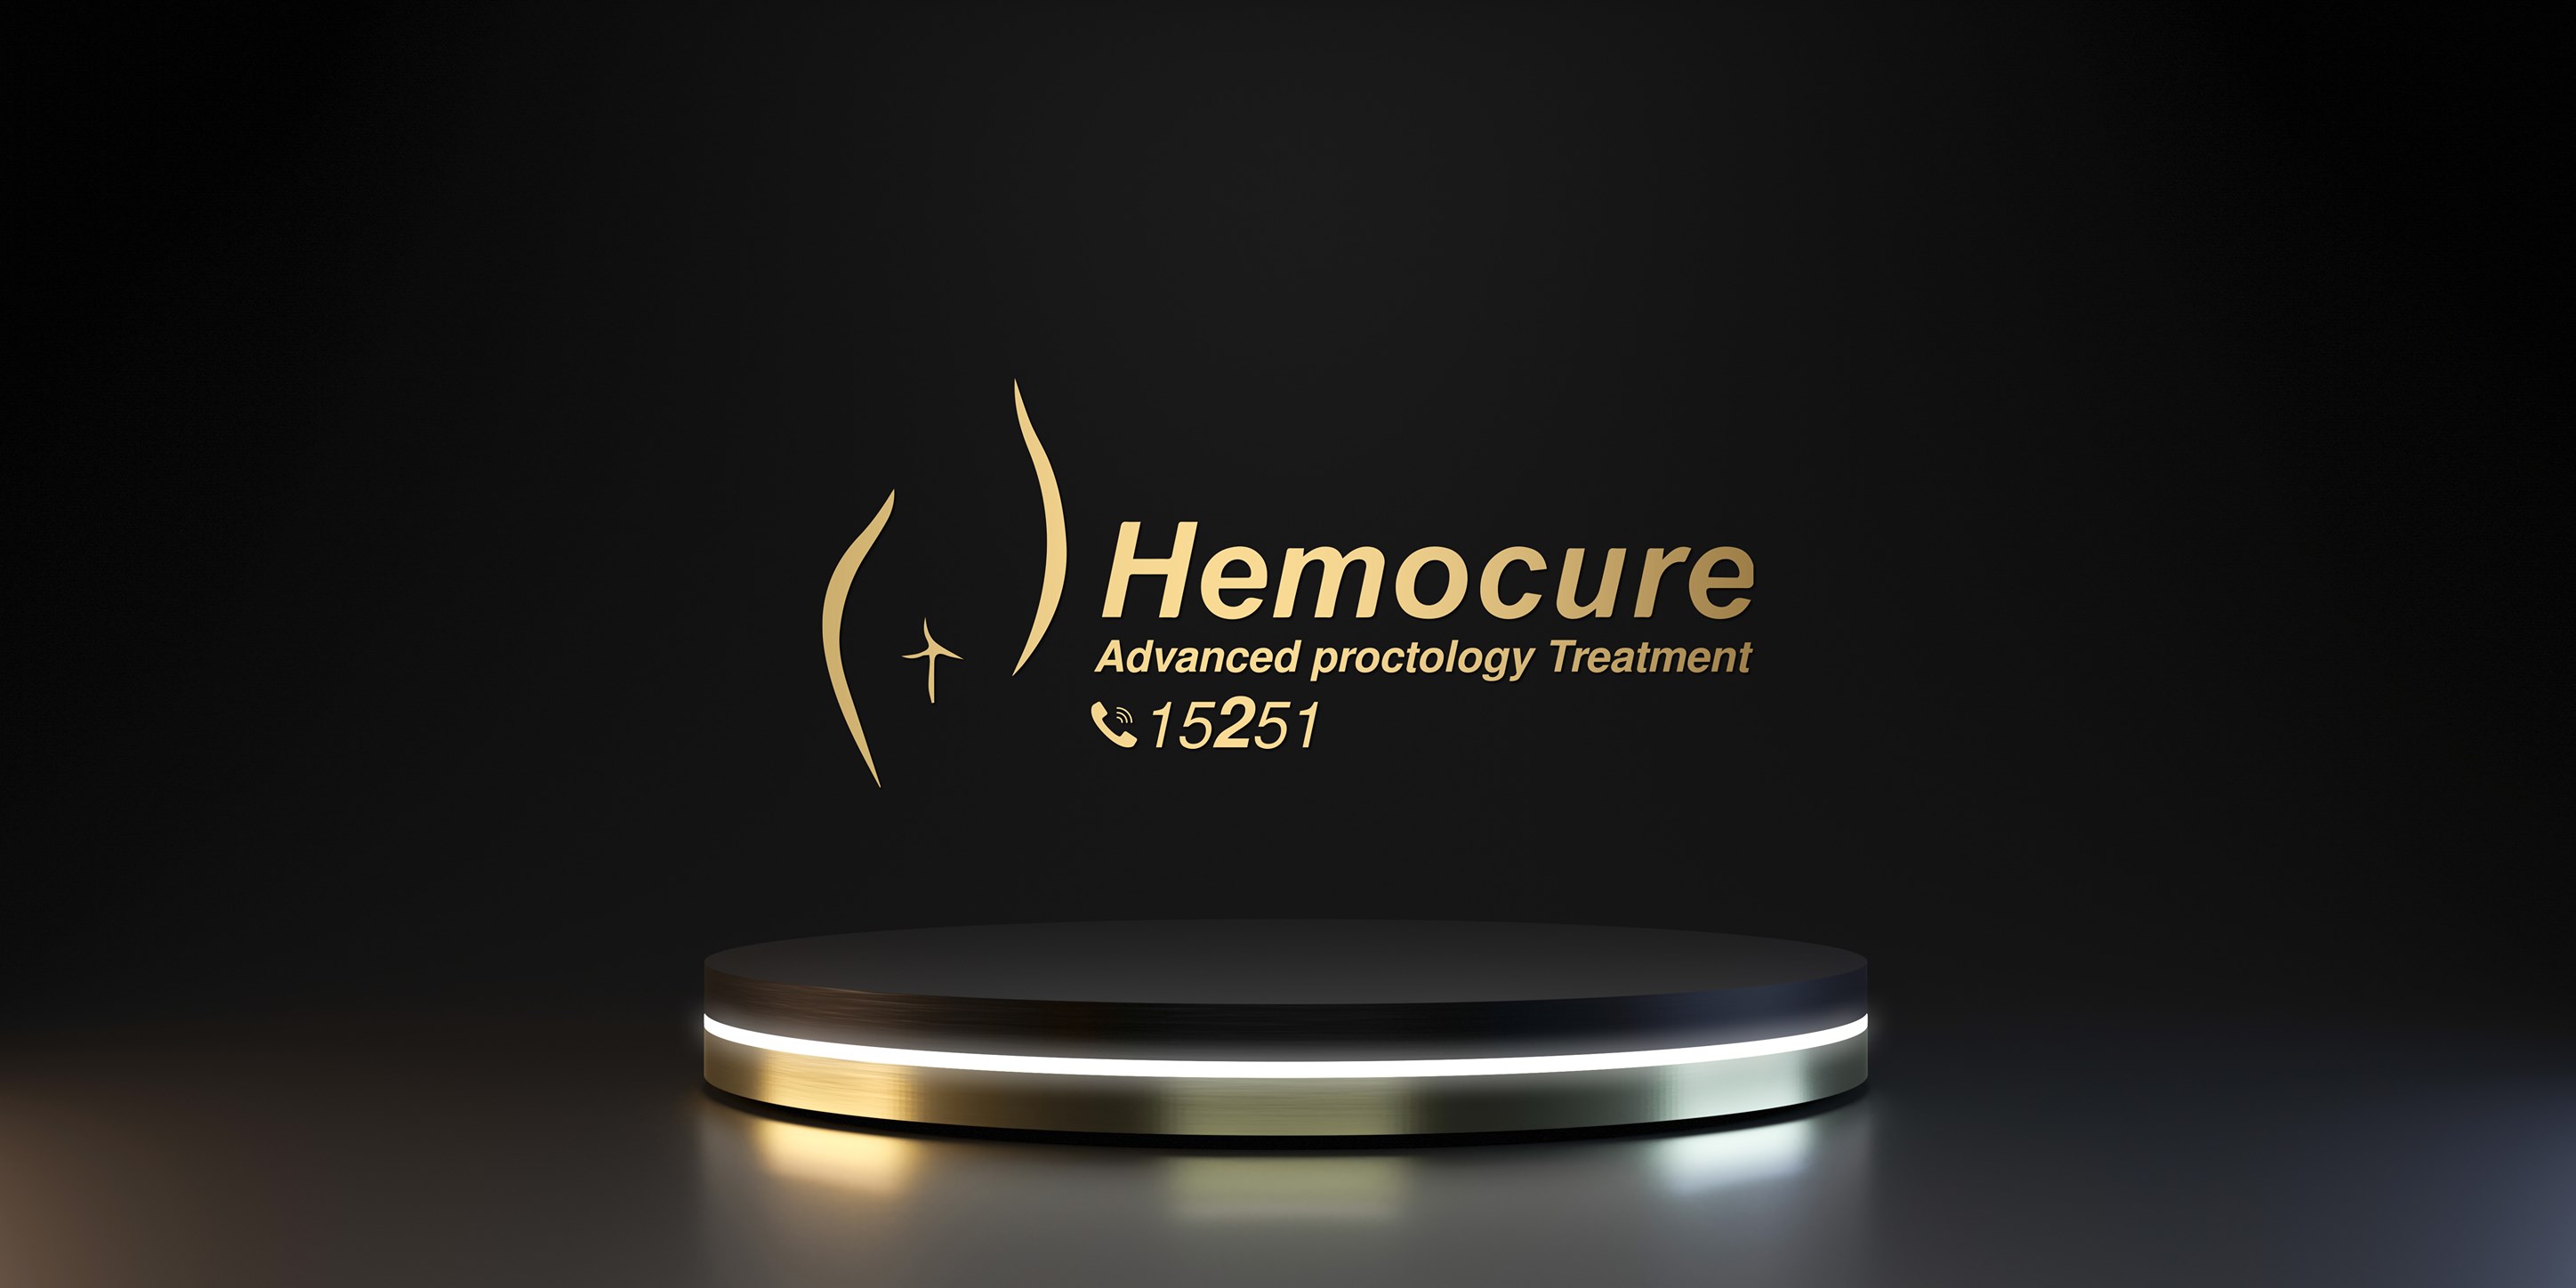 غلاف هيموكيور لعلاج أمراض الشرج والمستقيم Hemocure clinic 